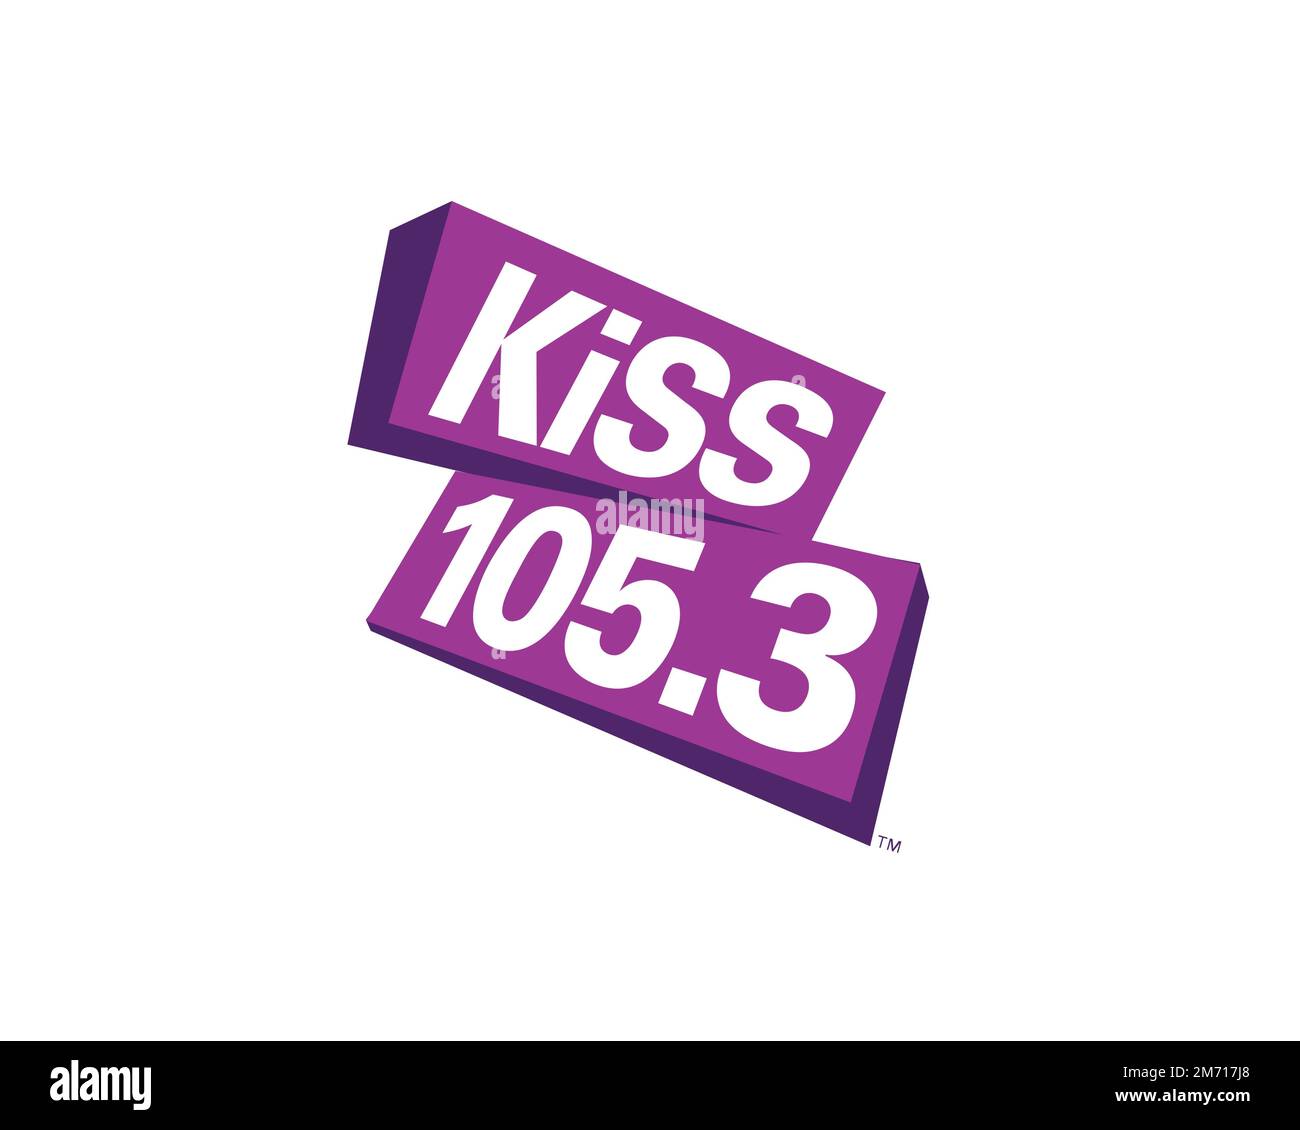 CJMX FM, rotated logo, white background B Stock Photo